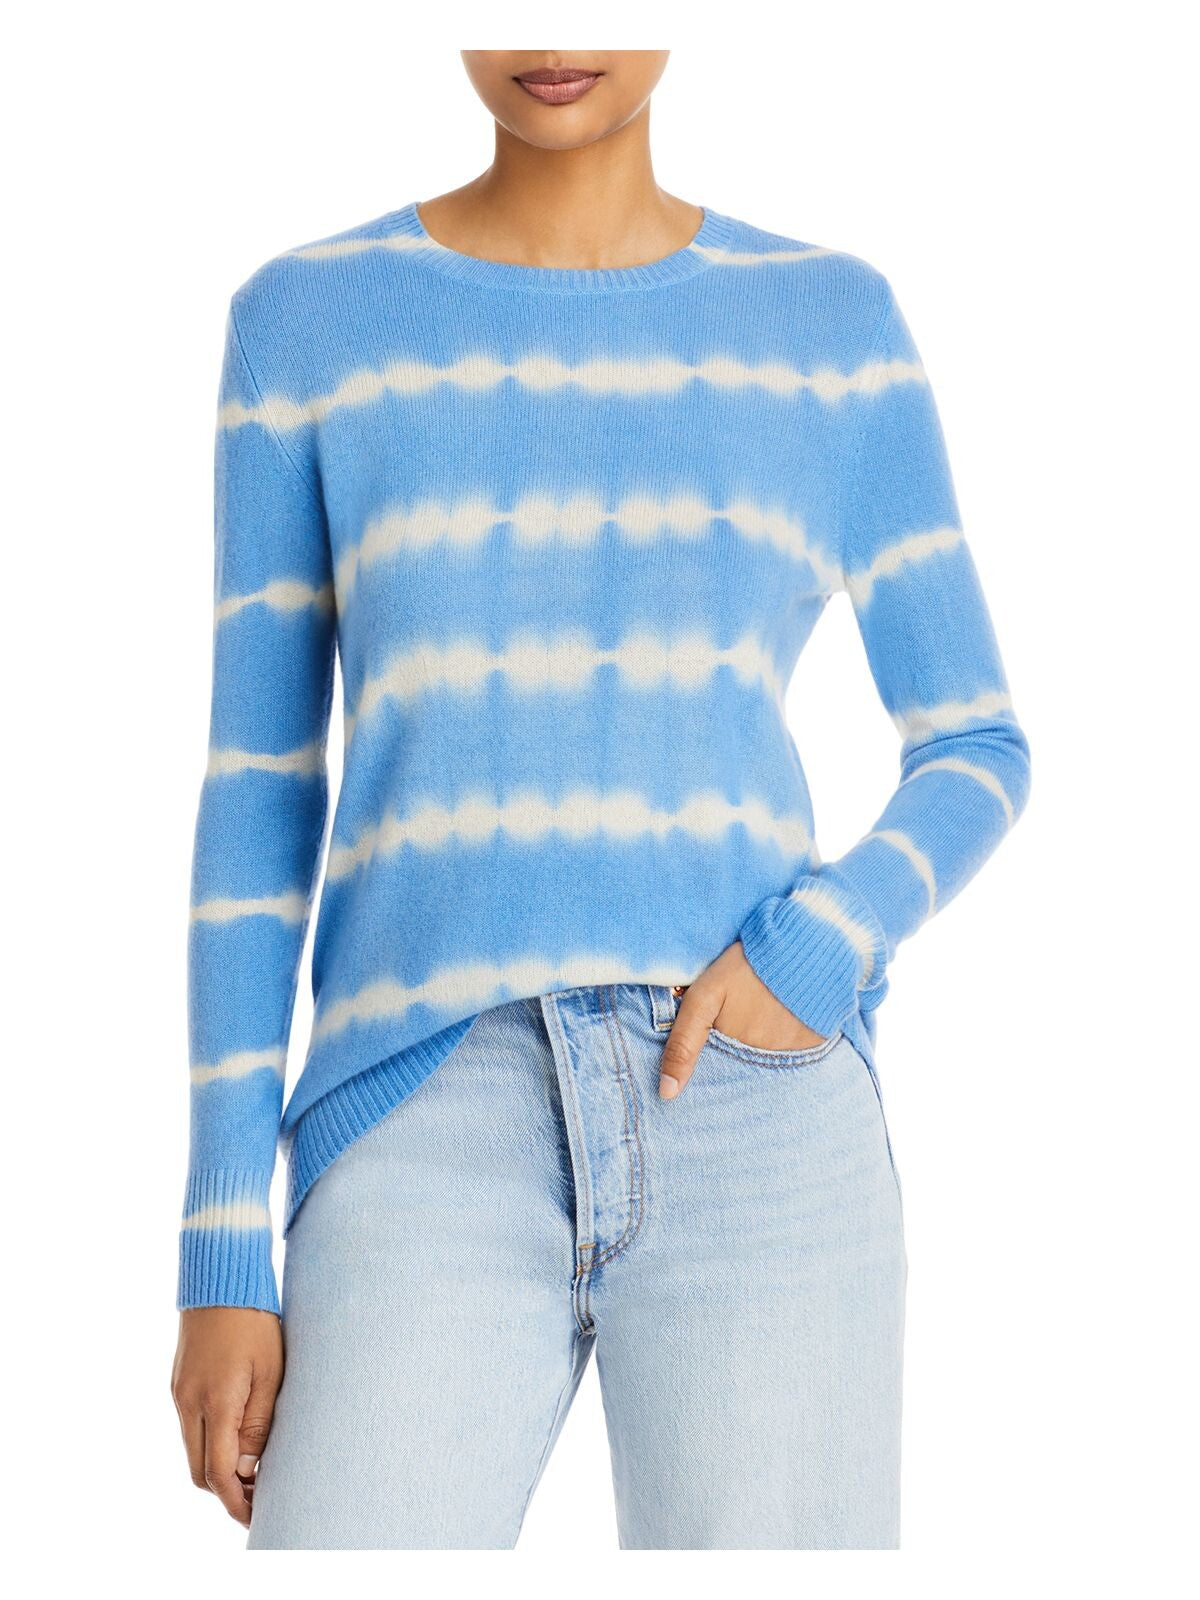 Designer Brand Womens Blue Tie Dye Long Sleeve Crew Neck Sweater M